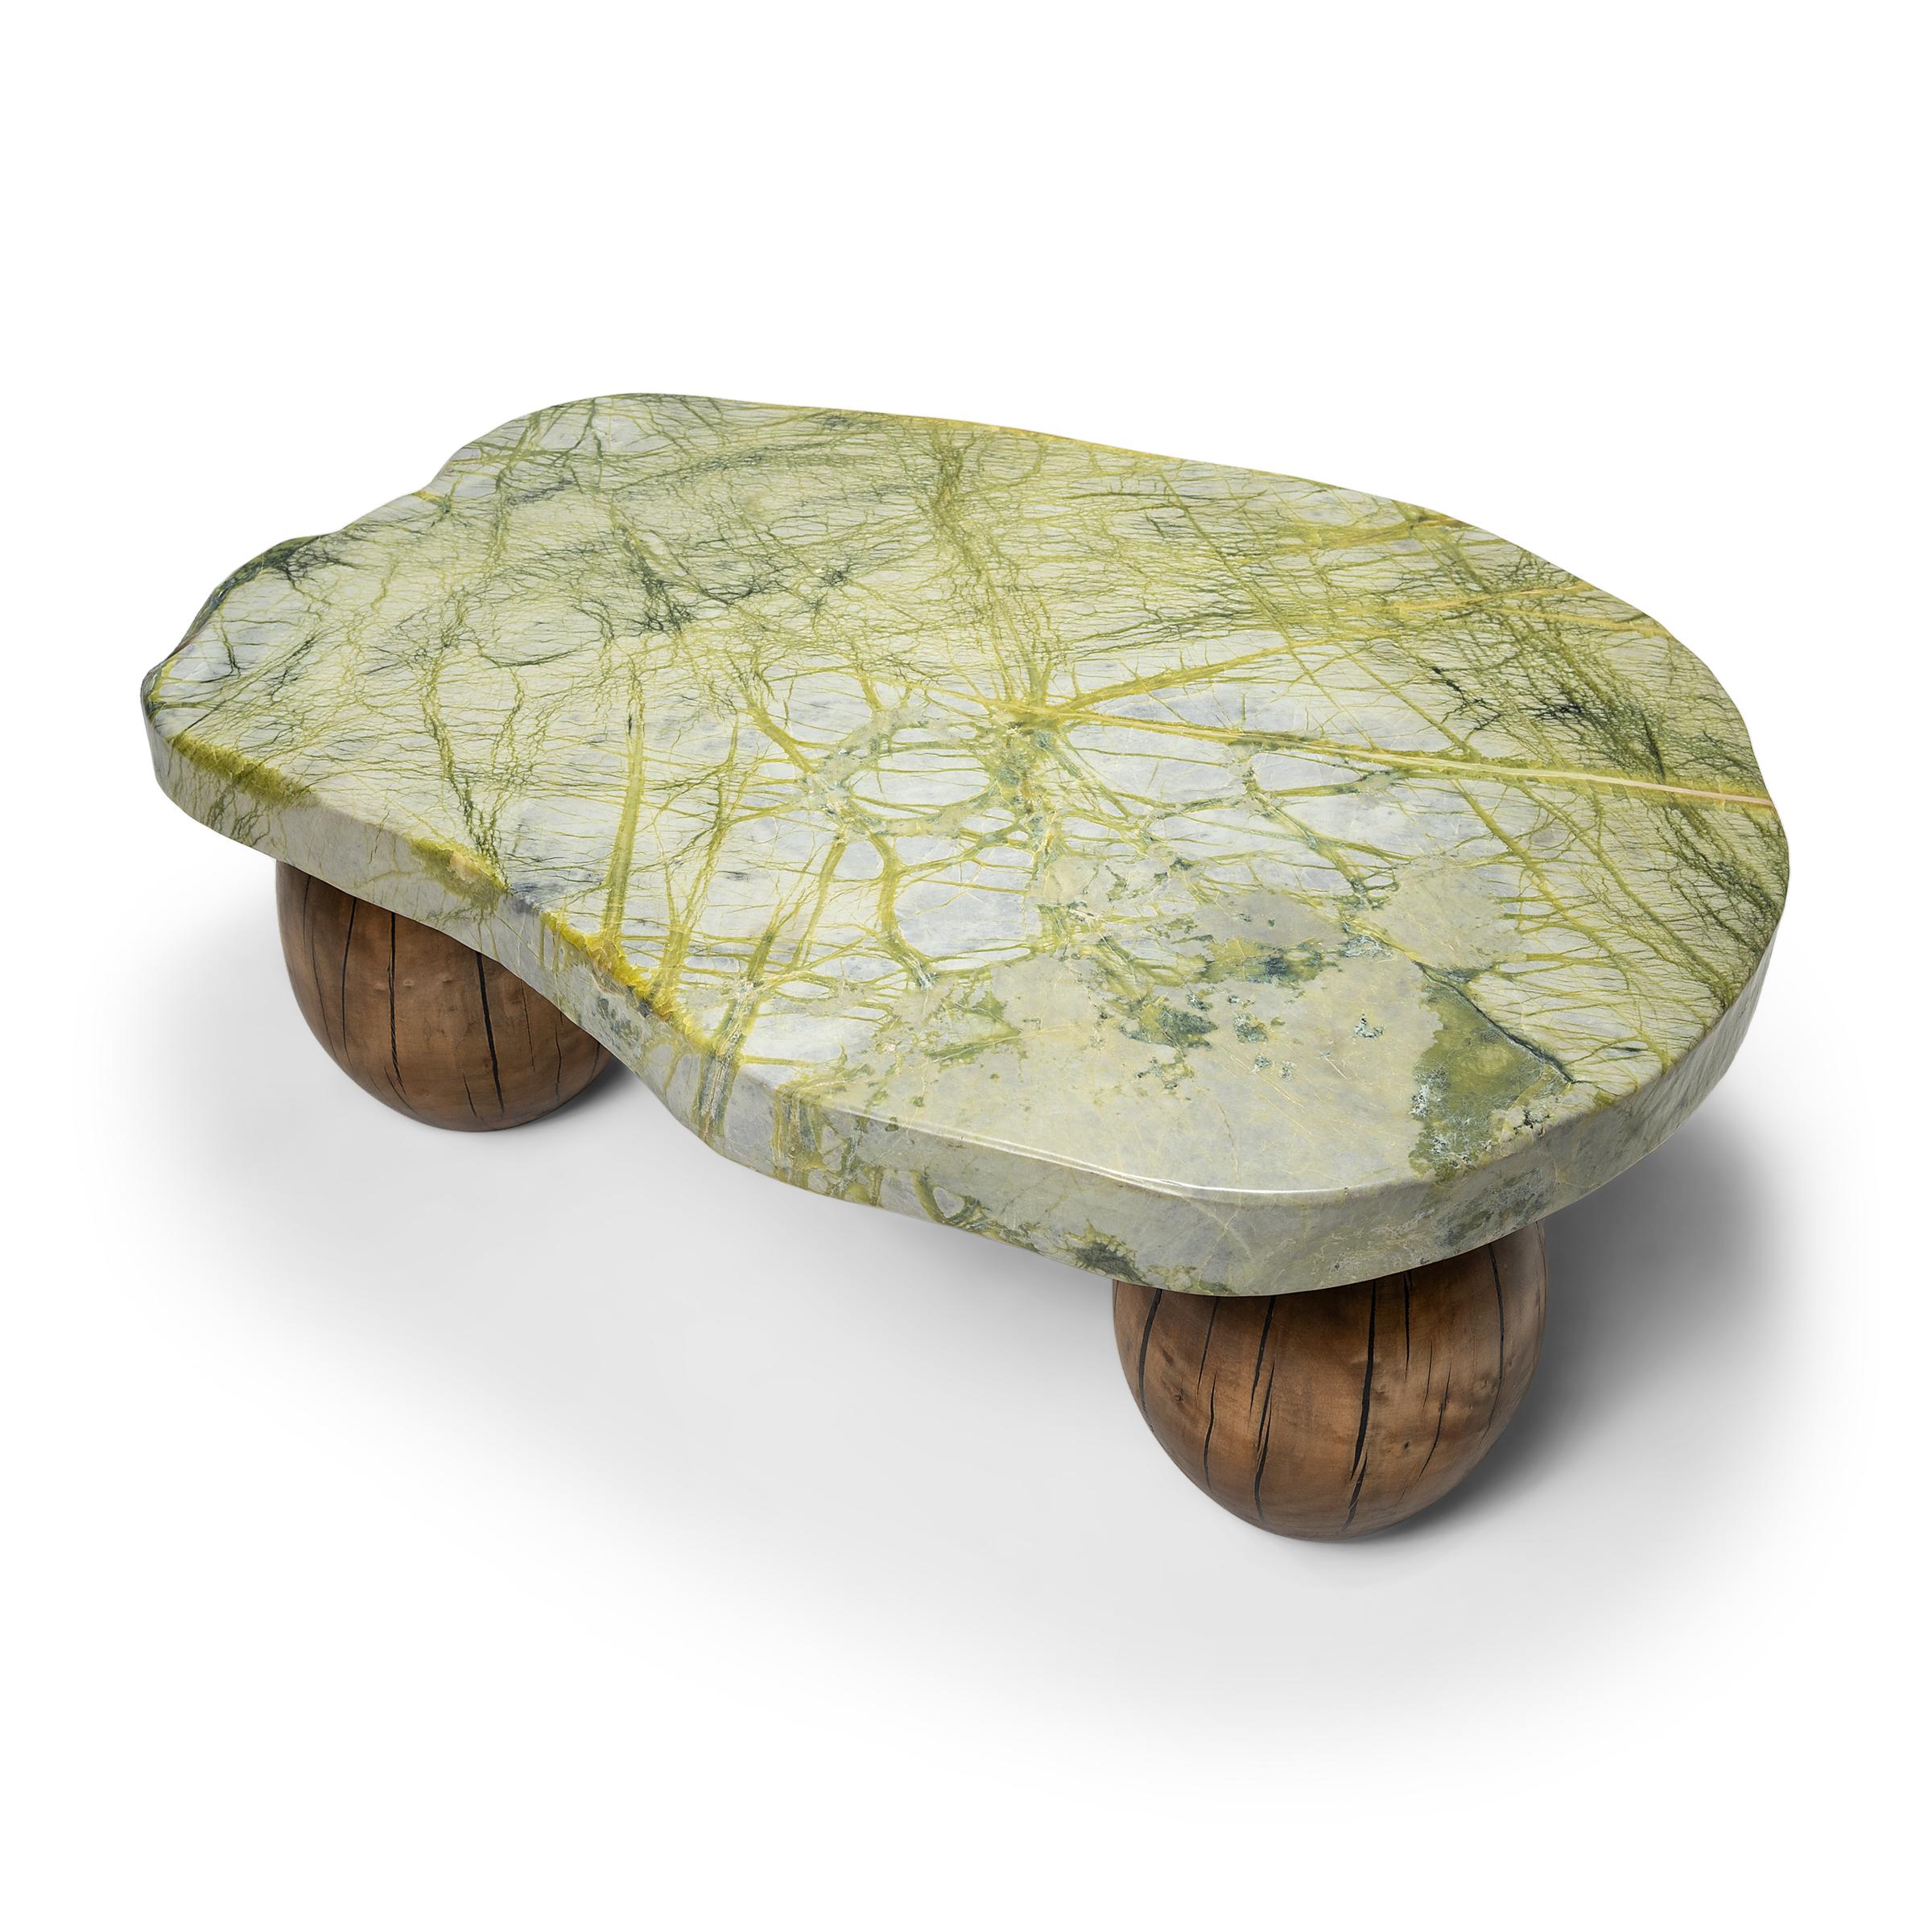 Organic Modern Chinese Greenery Meditation Stone Table